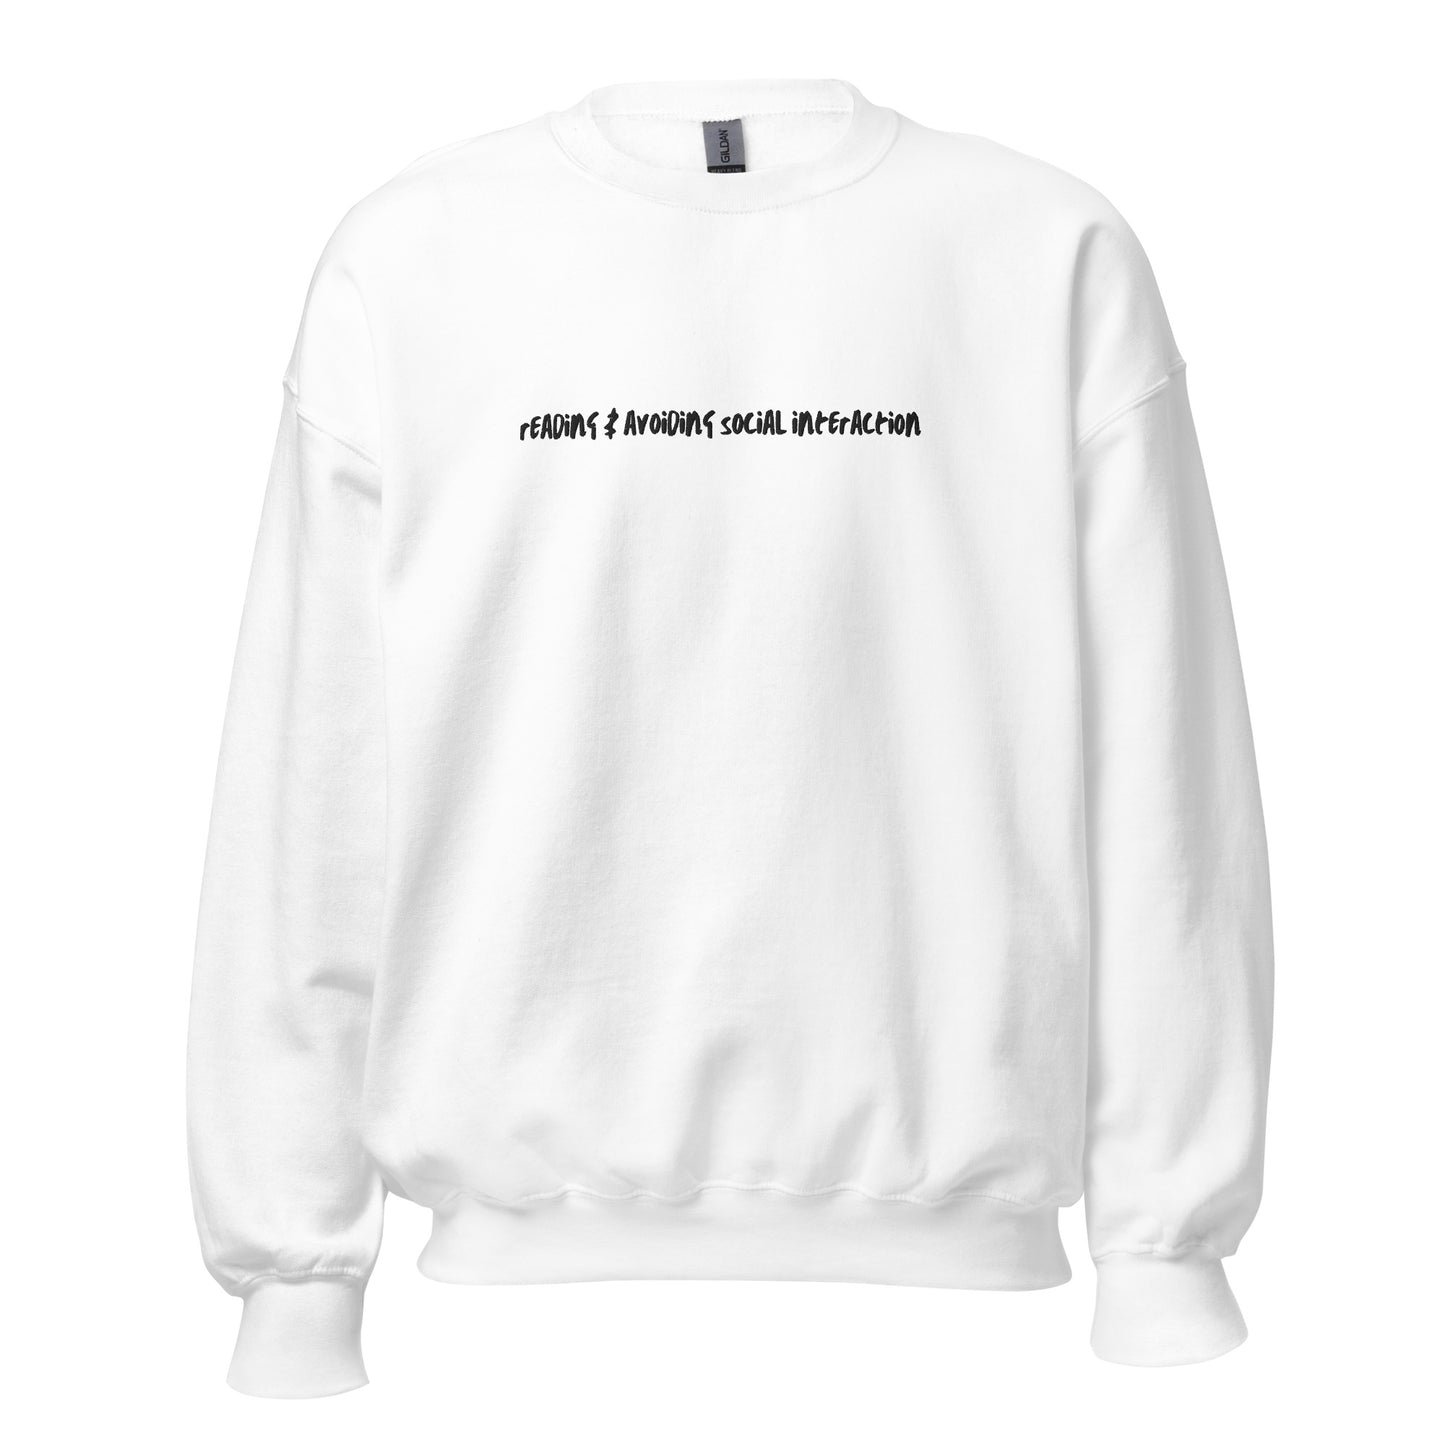 reading & avoiding social interaction embroidered sweatshirt